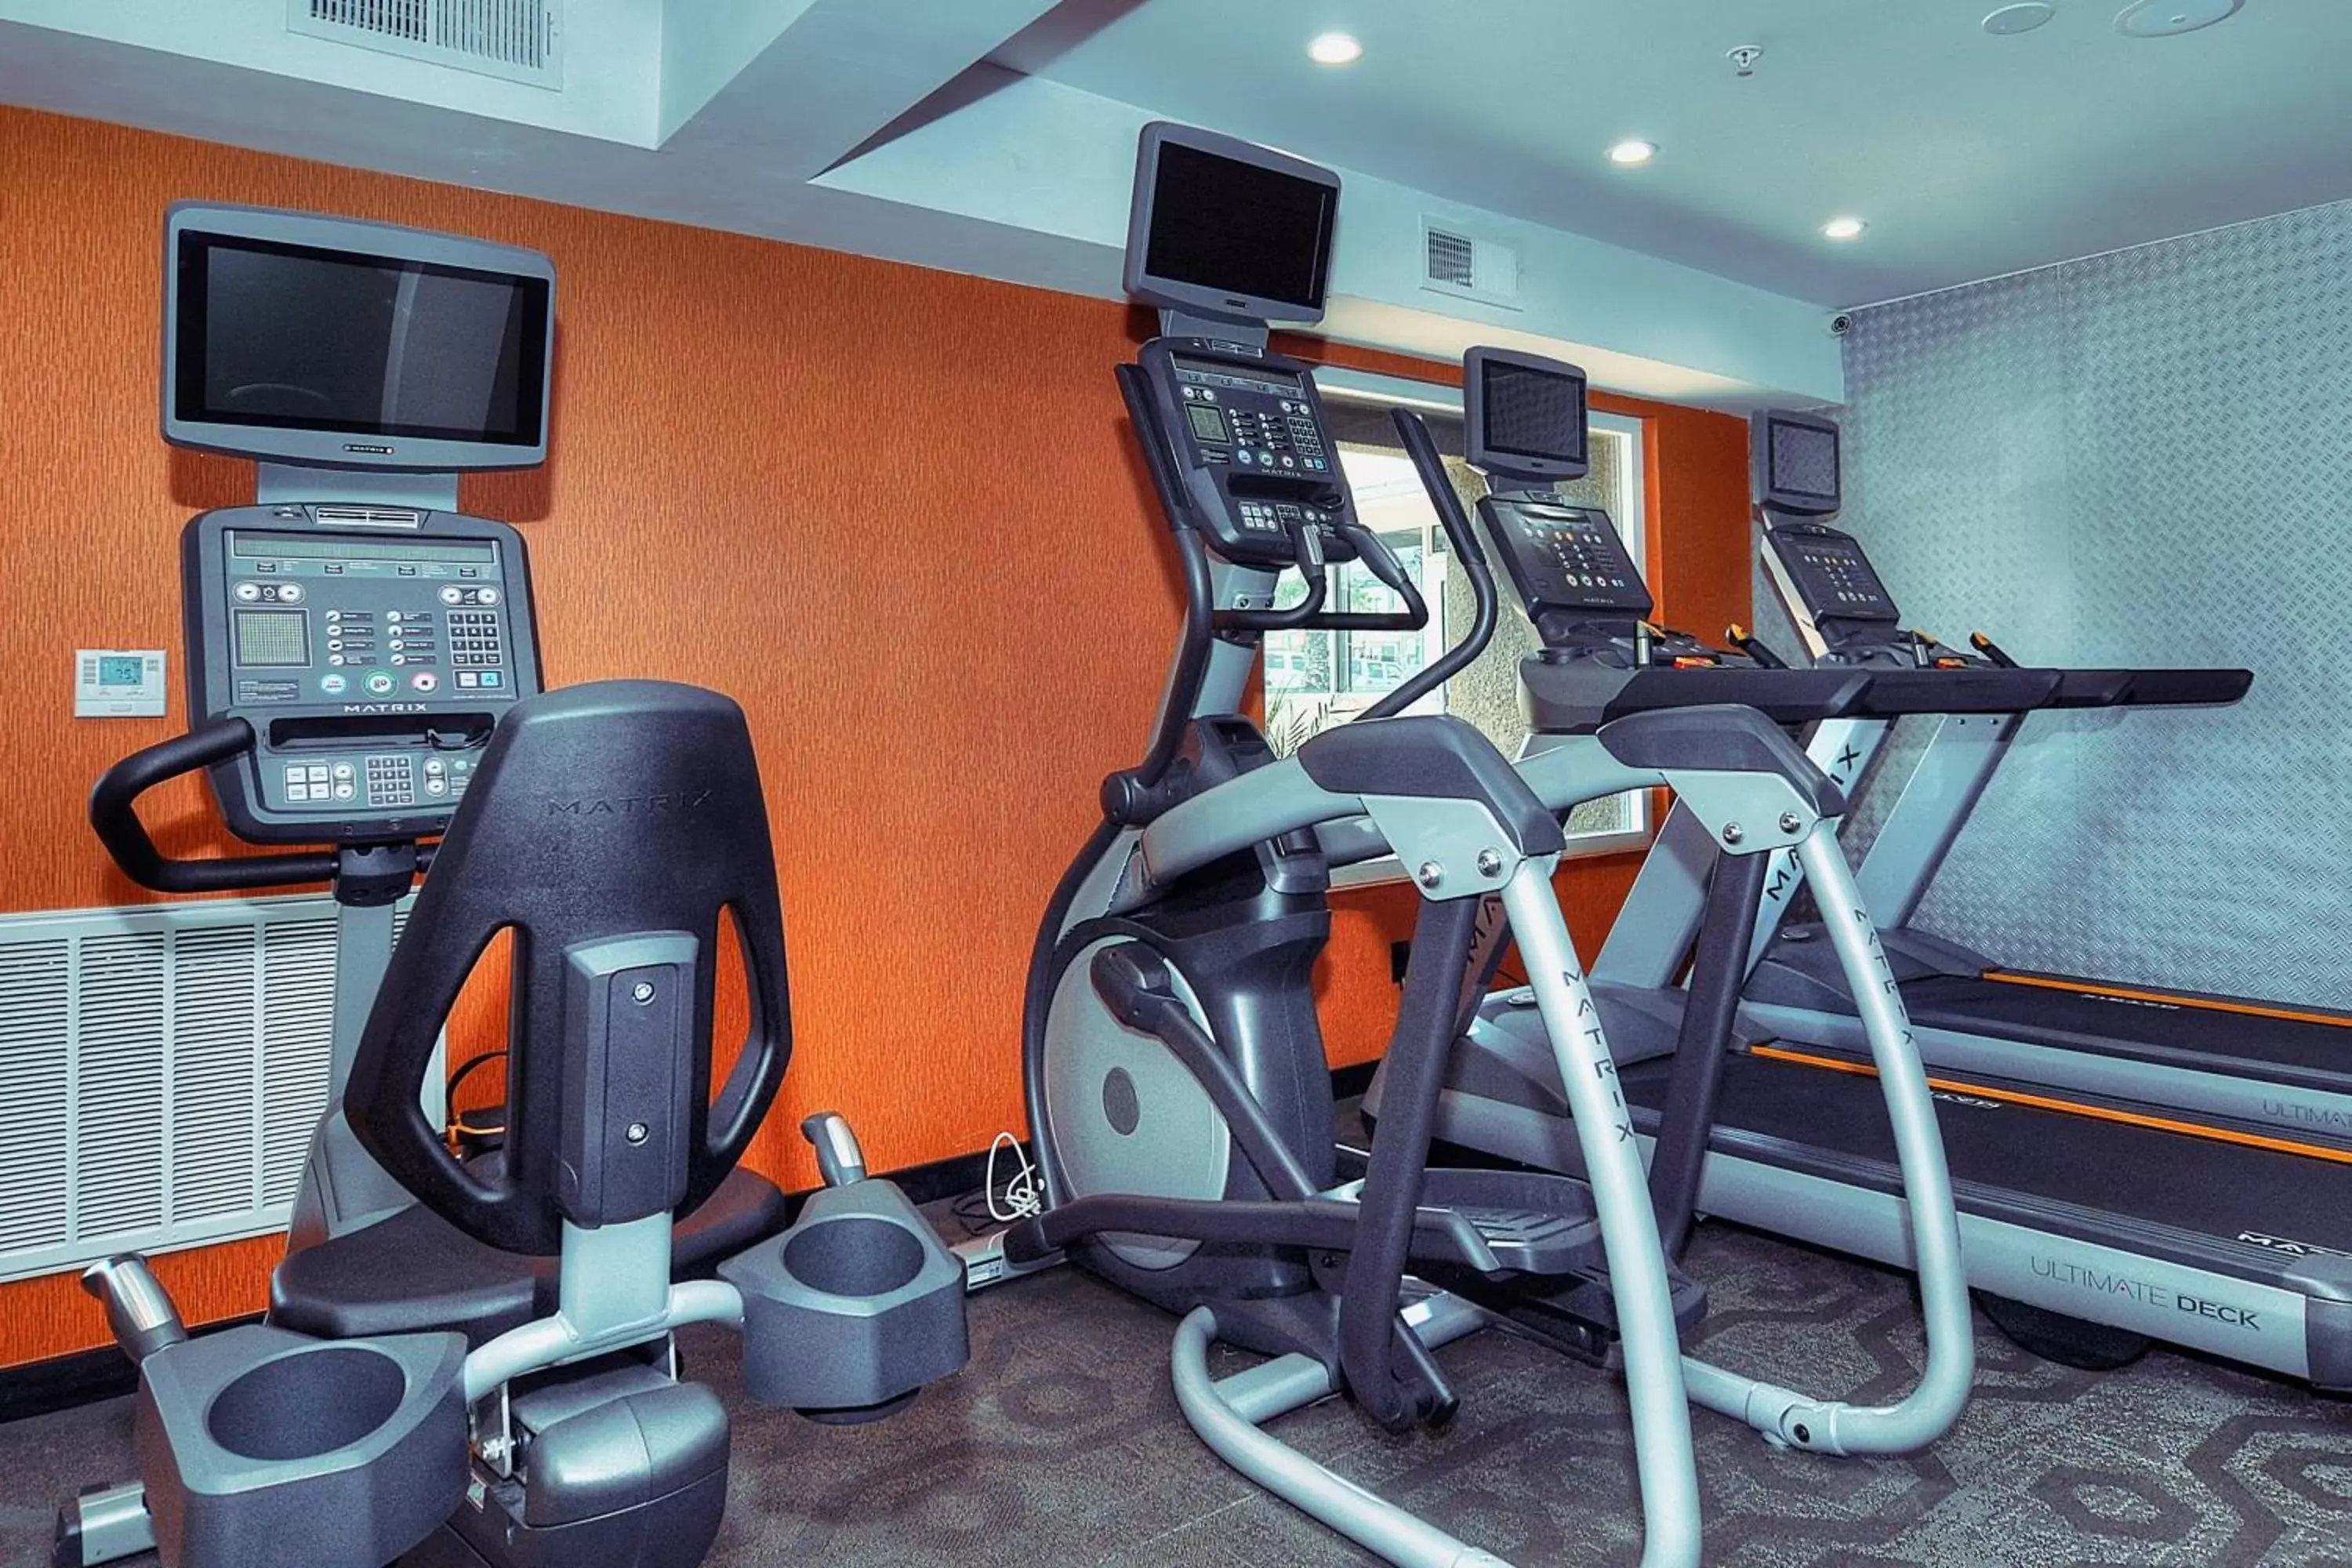 Fitness centre/facilities, Fitness Center/Facilities in Fairfield Inn & Suites by Marriott Los Angeles Rosemead